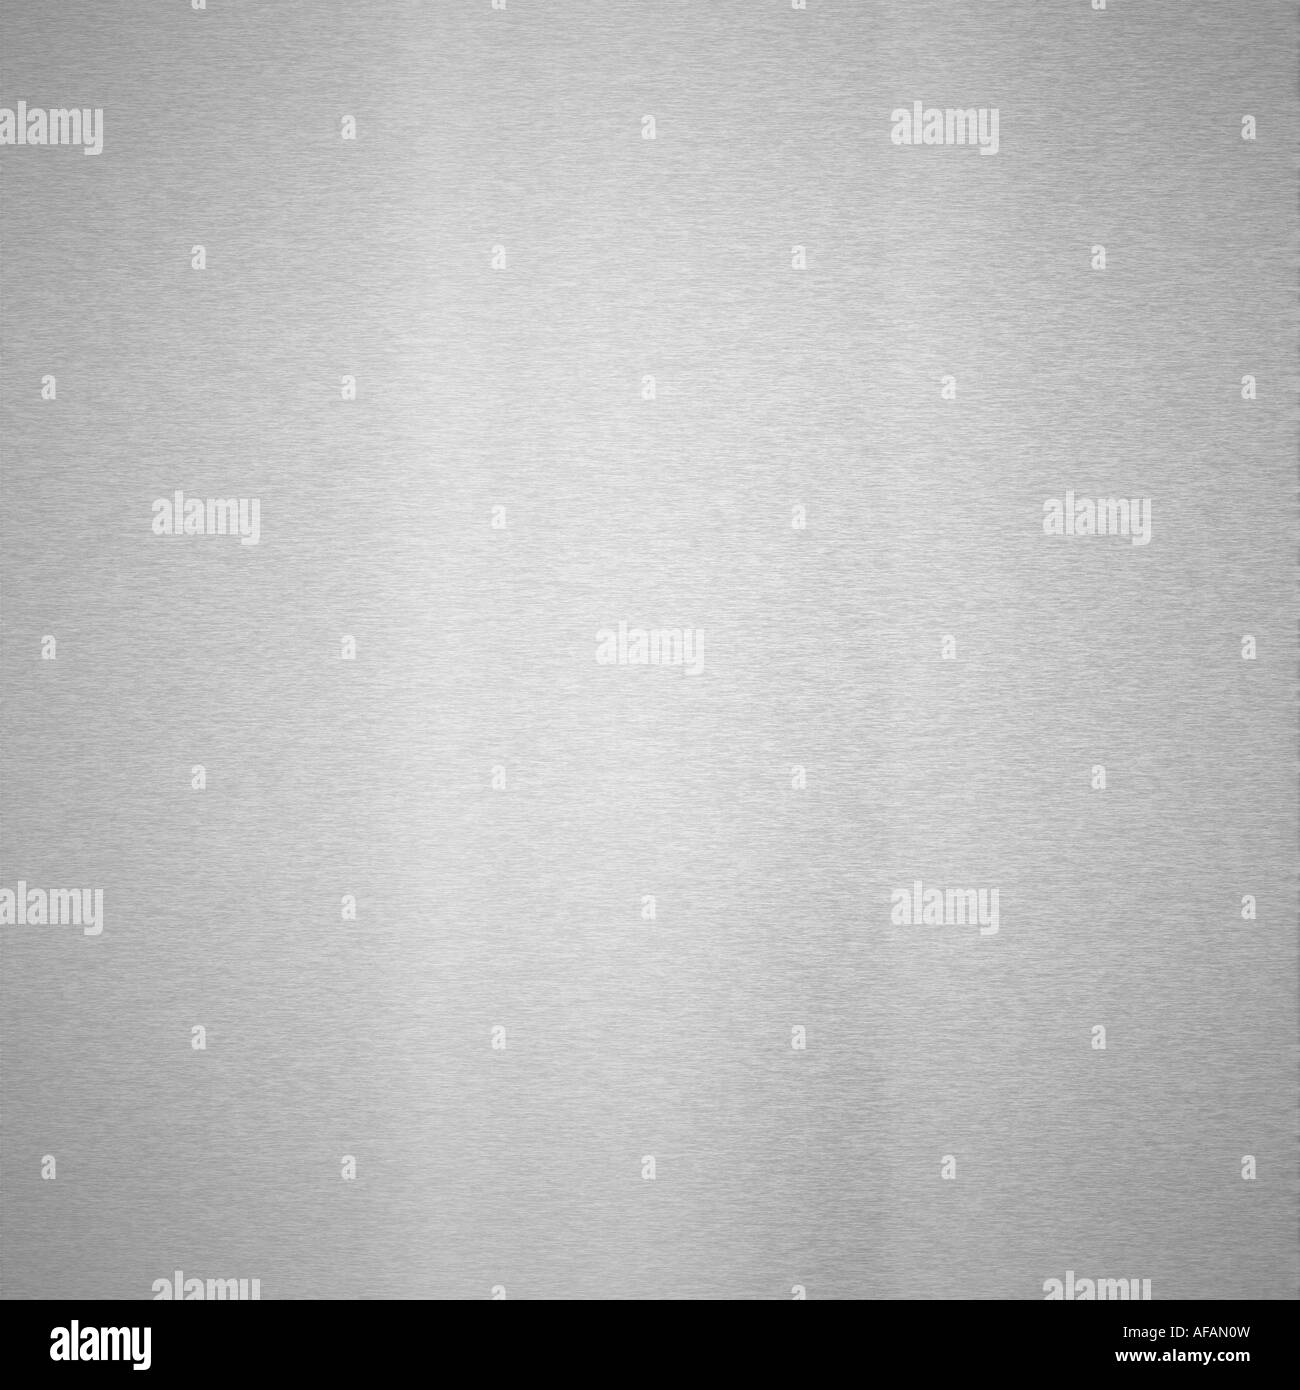 Extra large Black and White Stock Photos & Images - Alamy